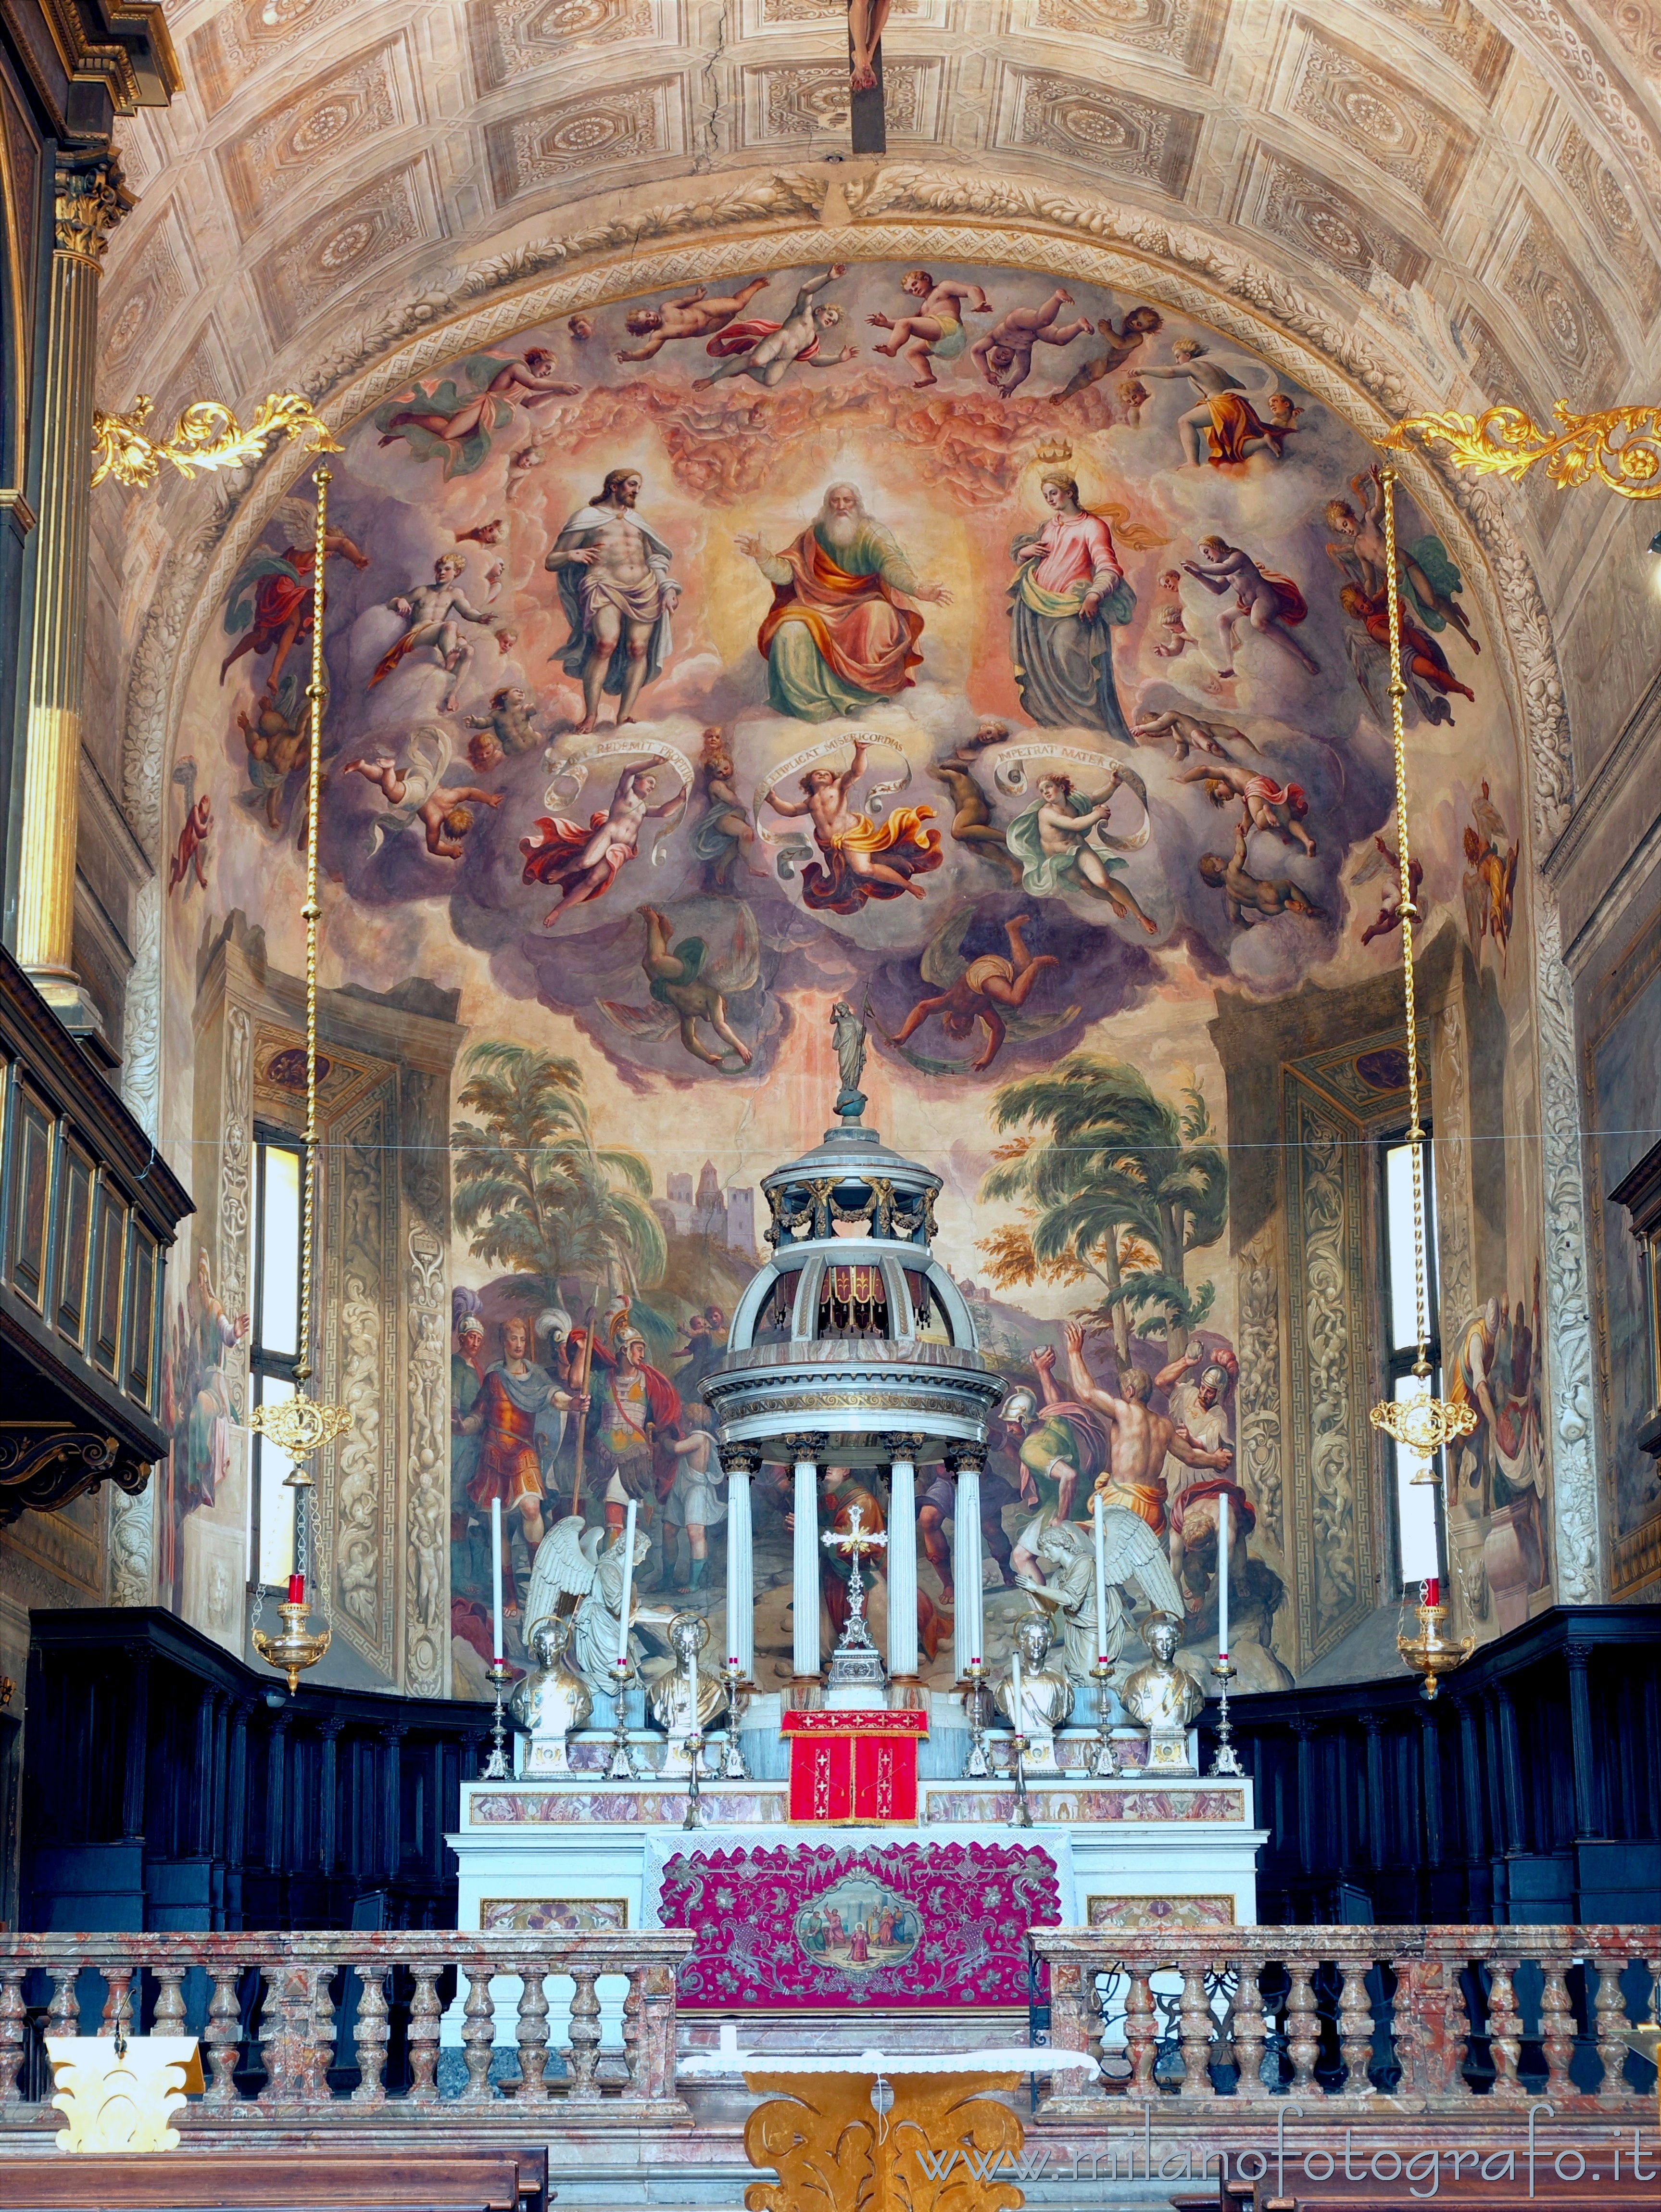 Vimercate (Monza e Brianza, Italy): Central apse of the the Church of Santo Stefano - Vimercate (Monza e Brianza, Italy)